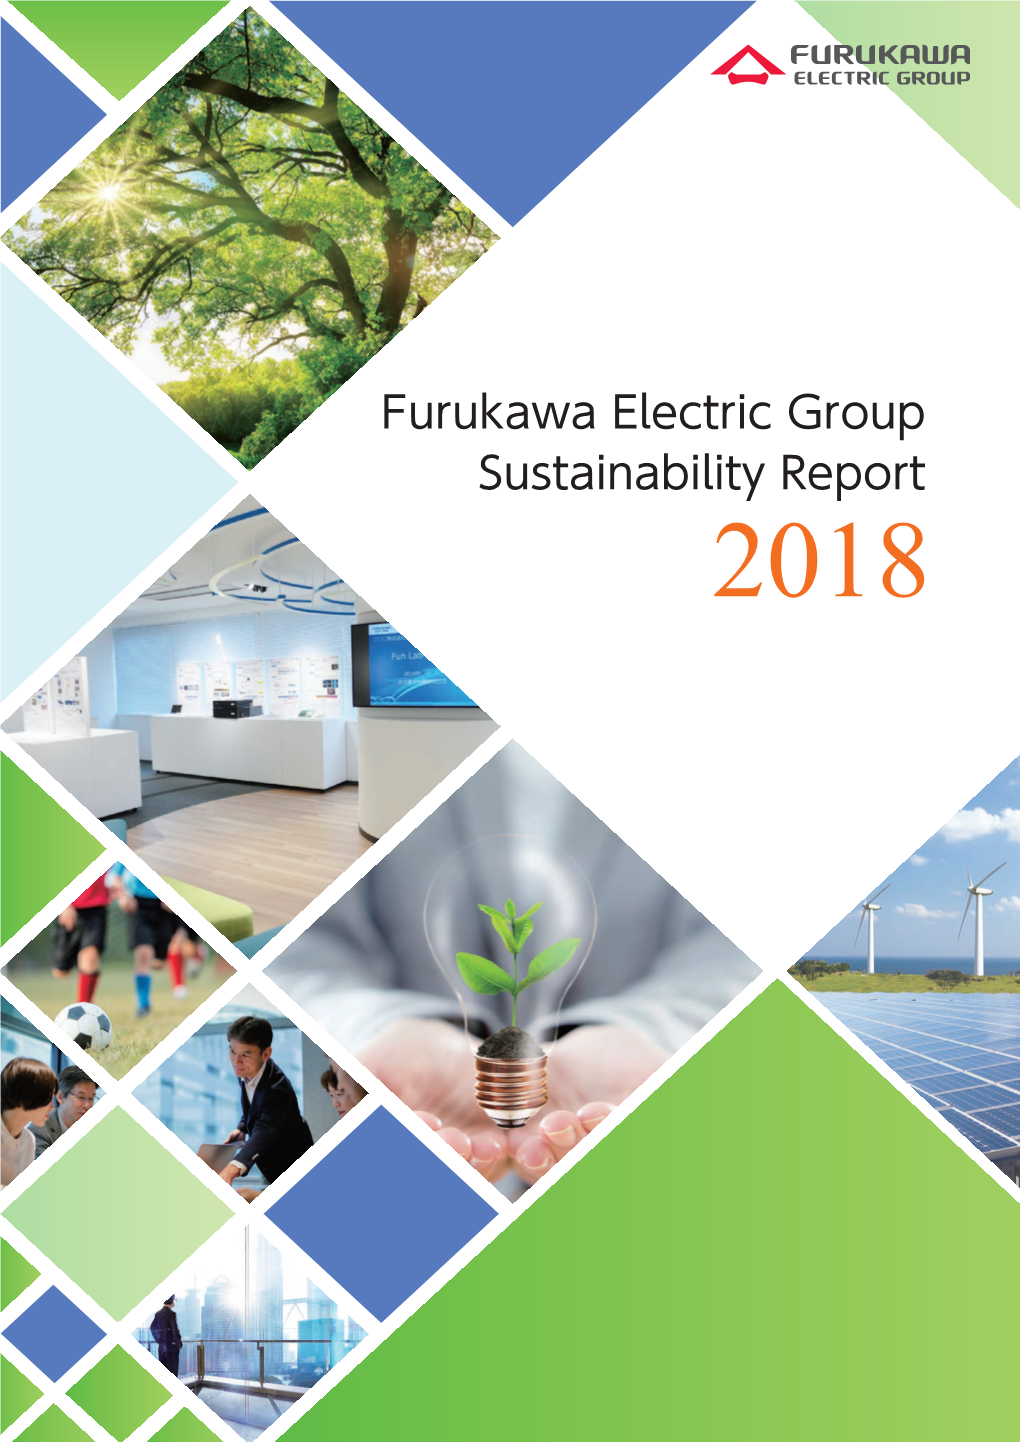 Furukawa Electric Group Sustainability Report 2018